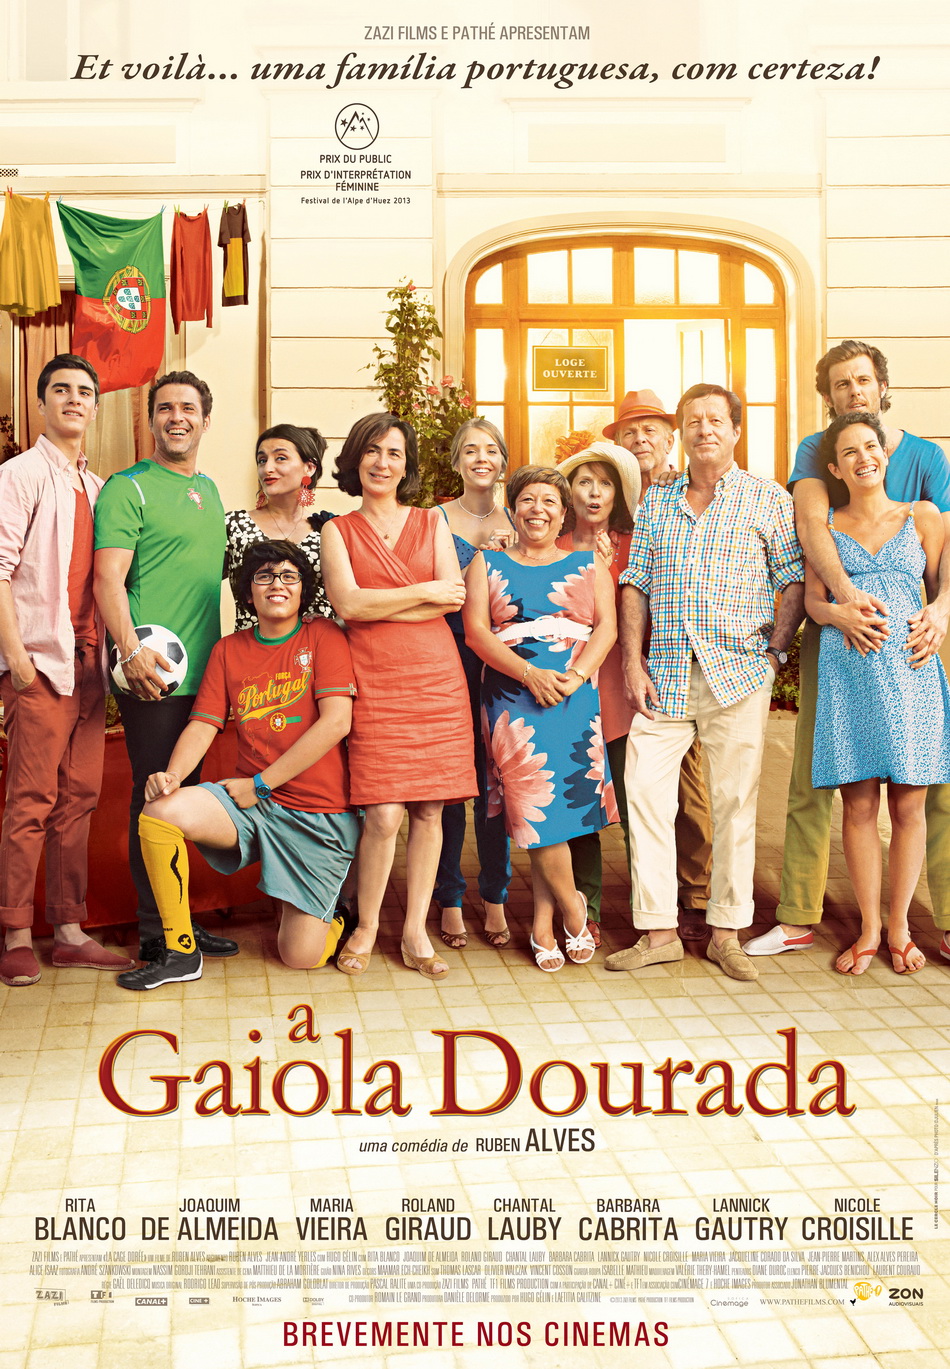 4th Film in Portuguese Cinema Cycle - A gaiola dourada